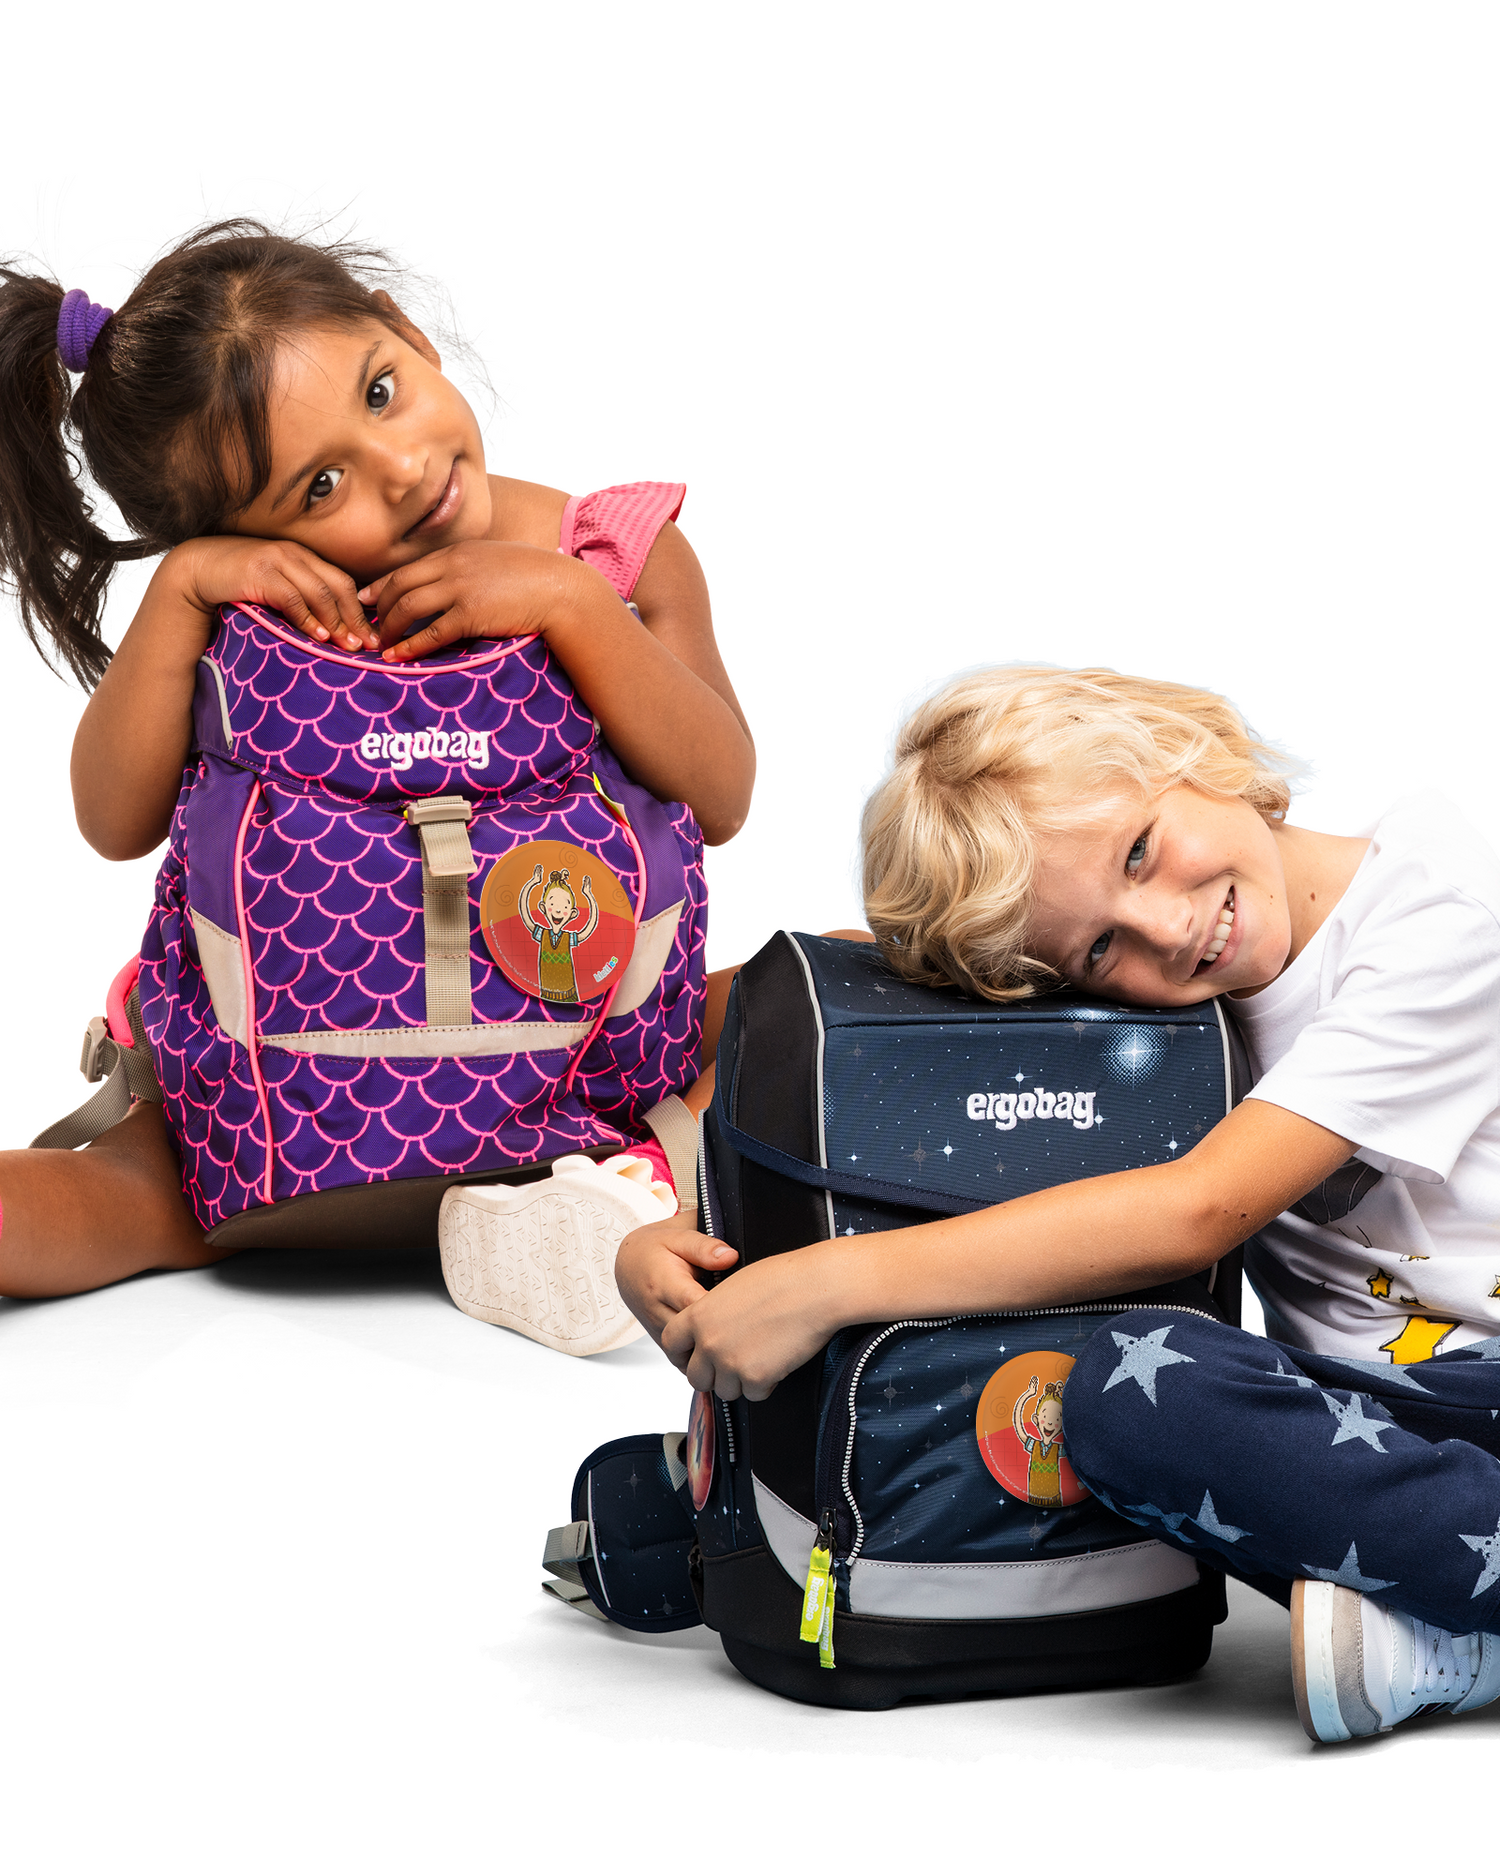 SdmT Benni Klettie: Attached to childrens ergobag backpack